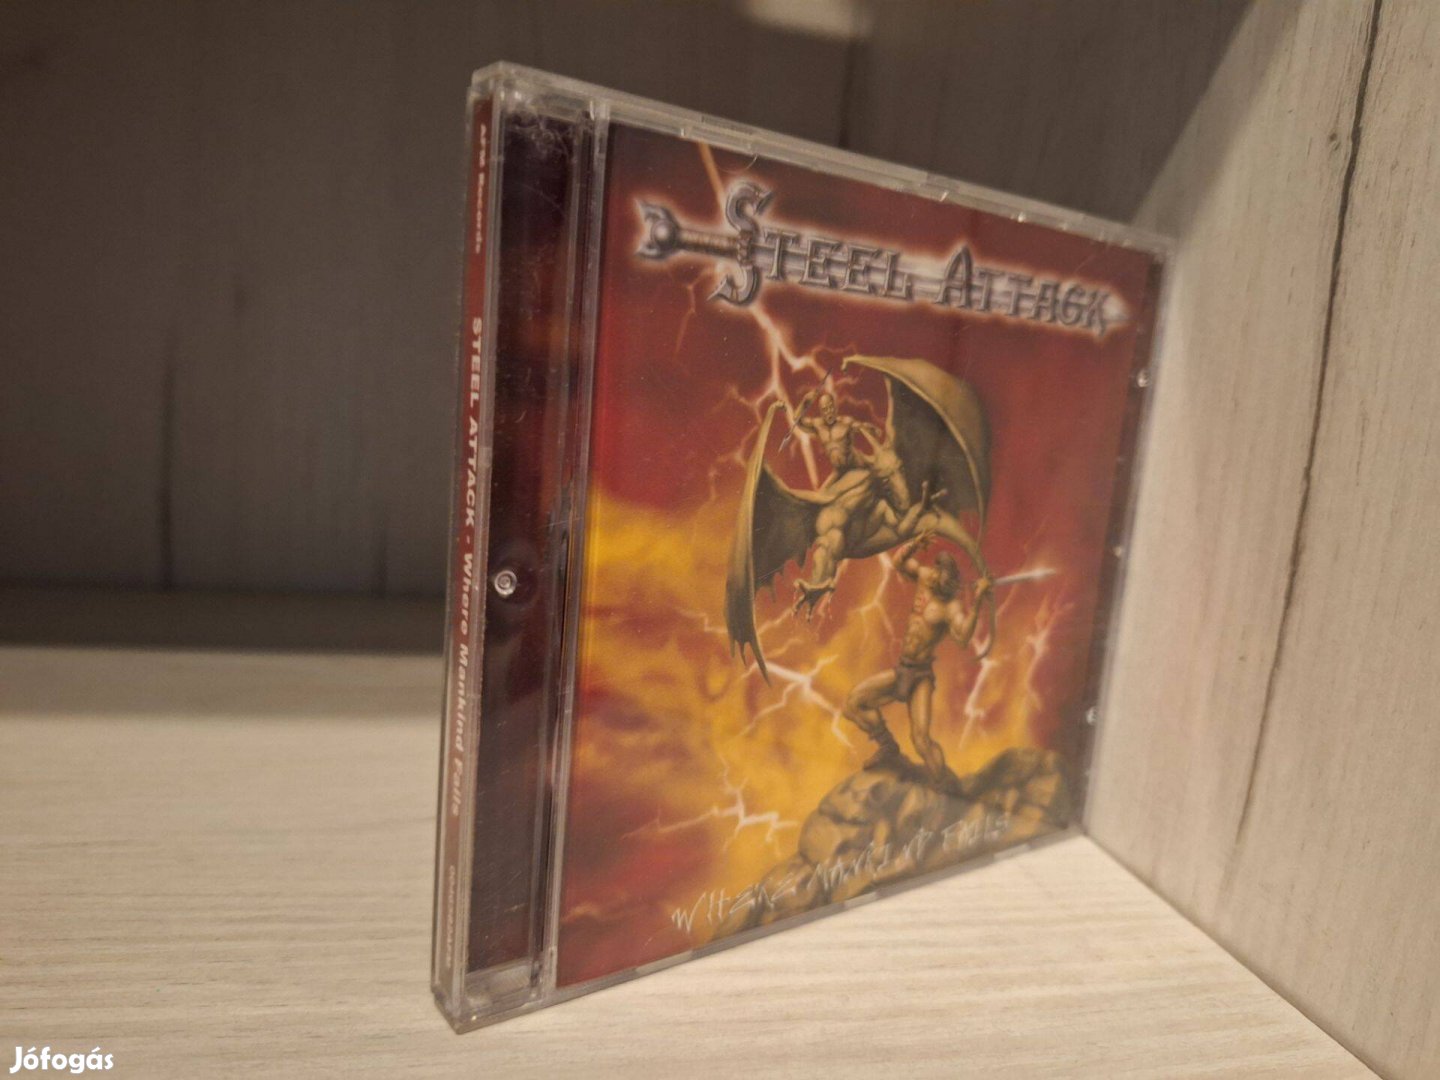 Steel Attack - Where Mankind Fails CD